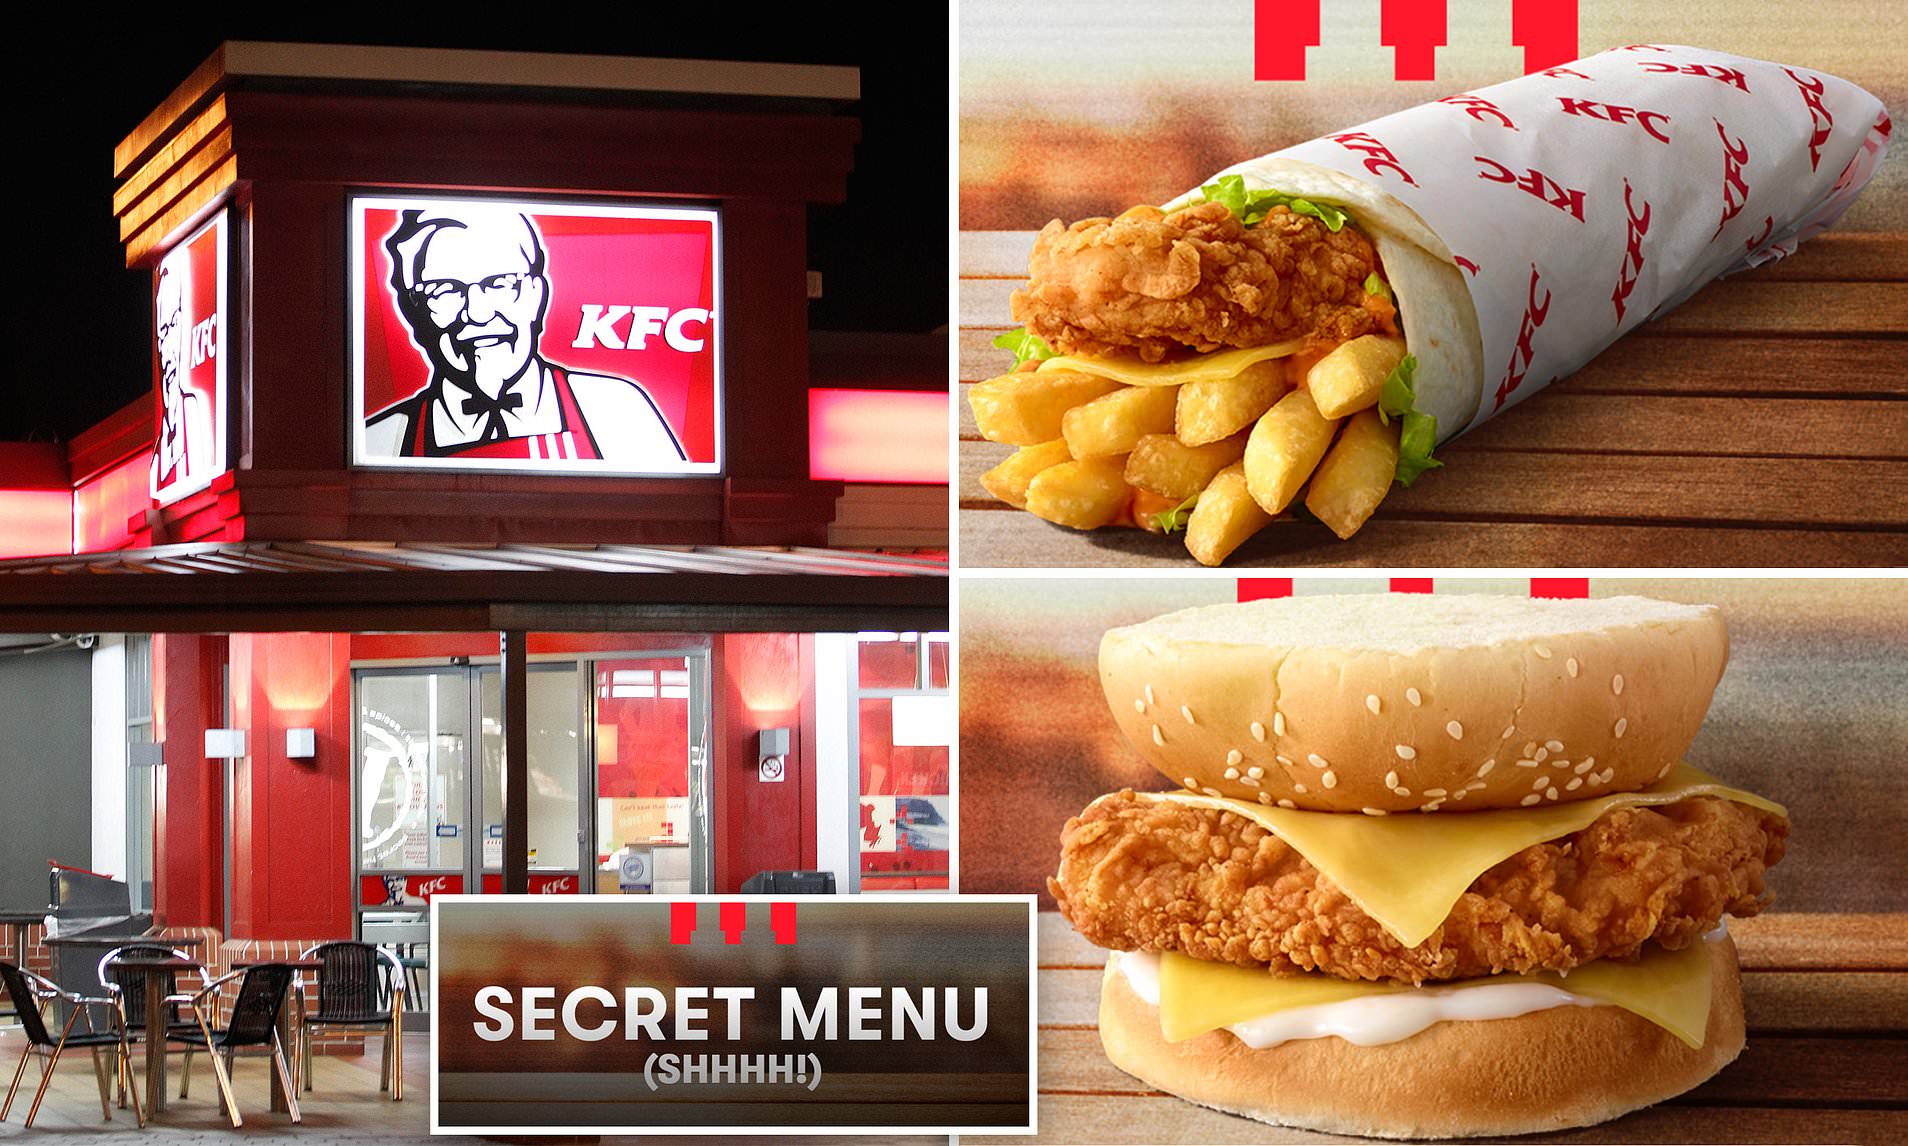 List Of KFC Secret Menu Items You Need To Order